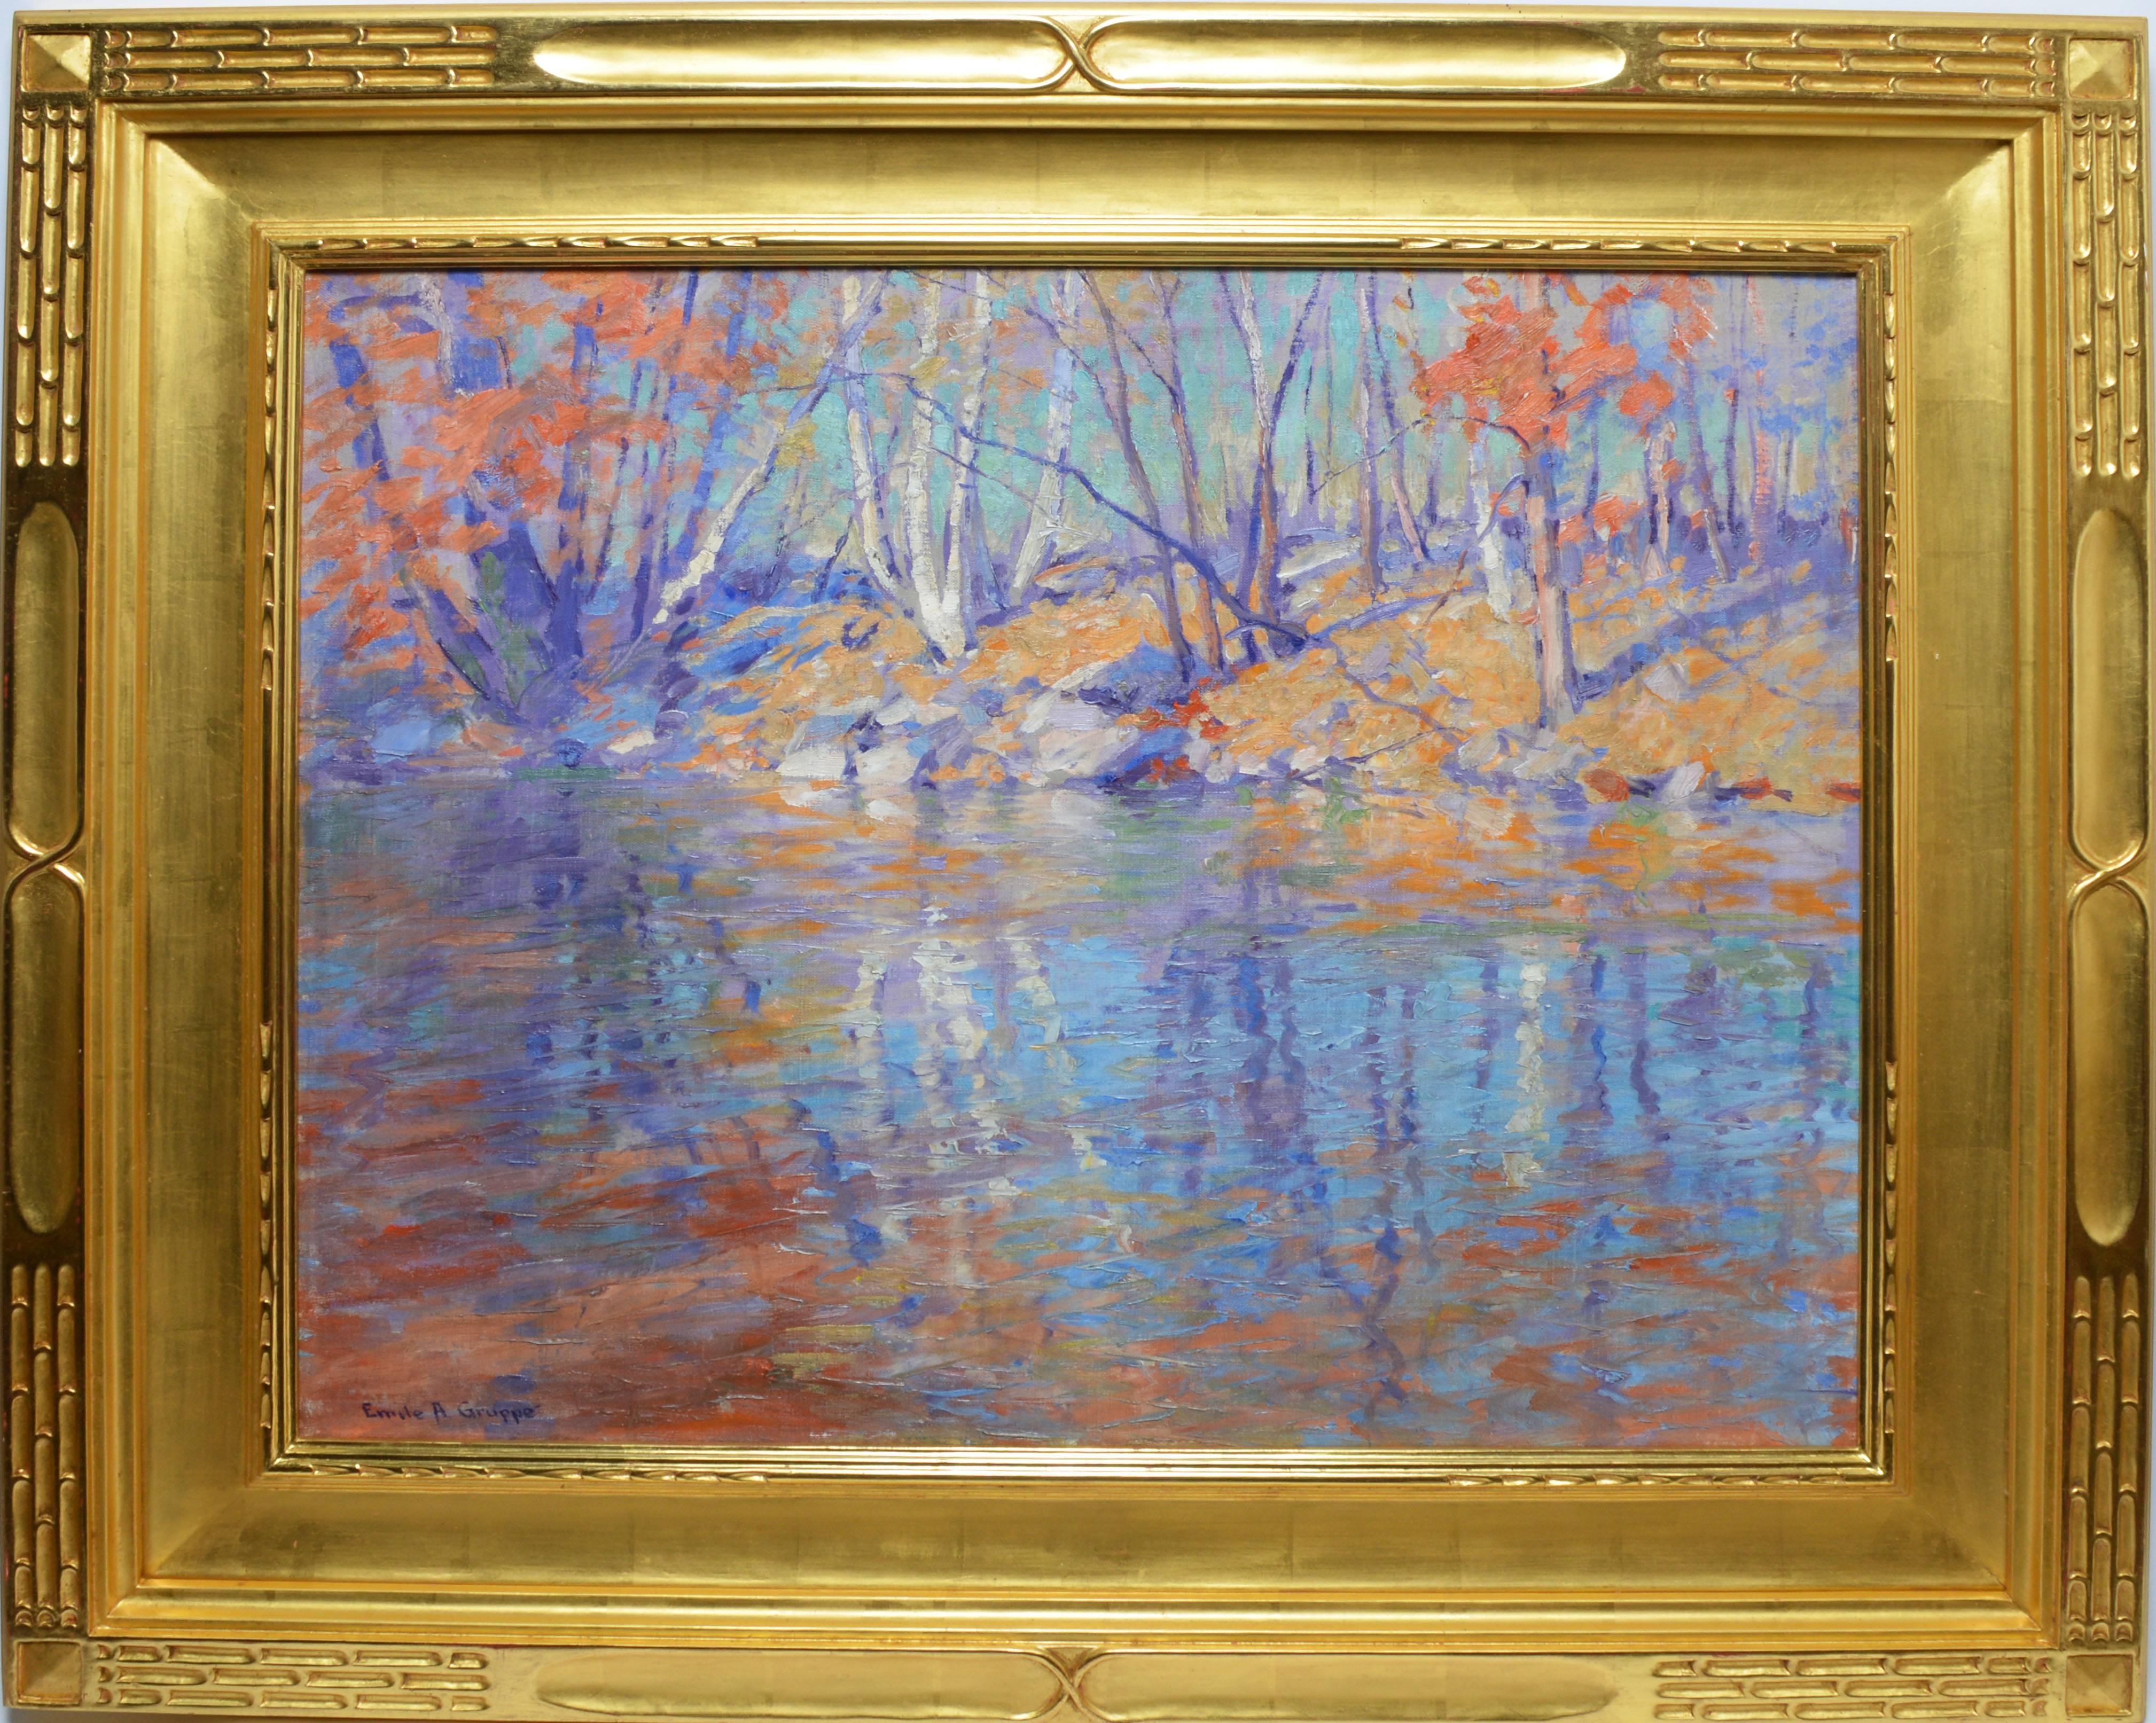 Emile Albert Gruppe Landscape Painting - Fall River Landscape by Emile Gruppe